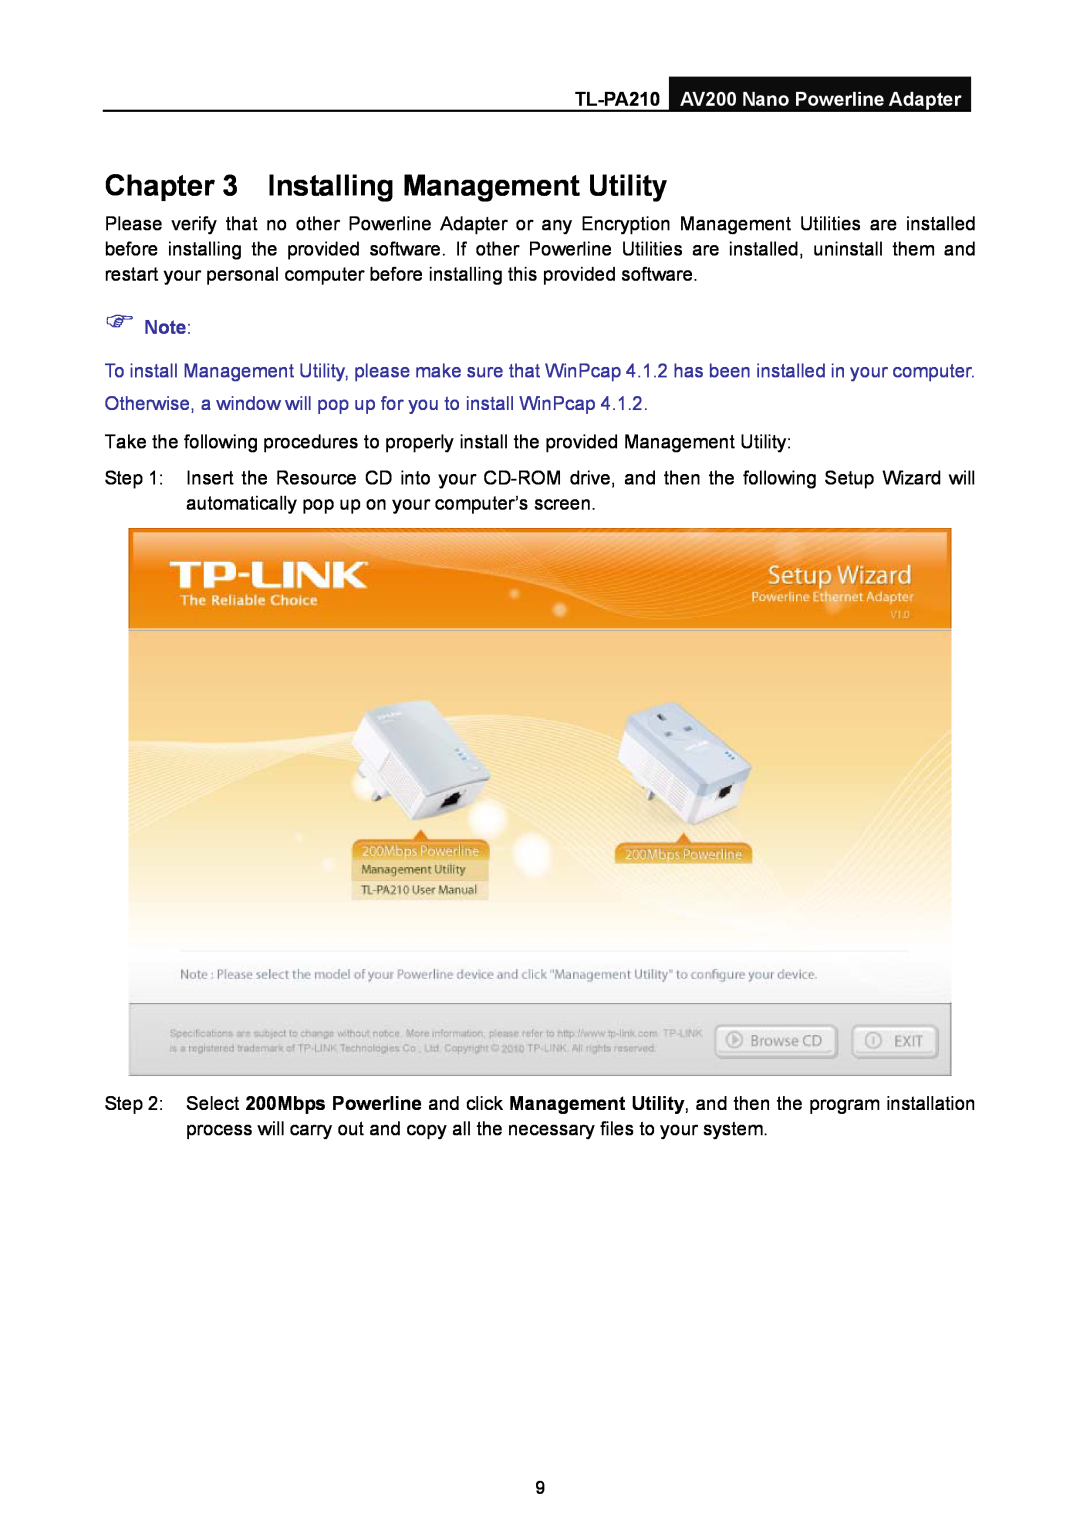 TP-Link manual Installing Management Utility, TL-PA210 AV200 Nano Powerline Adapter 